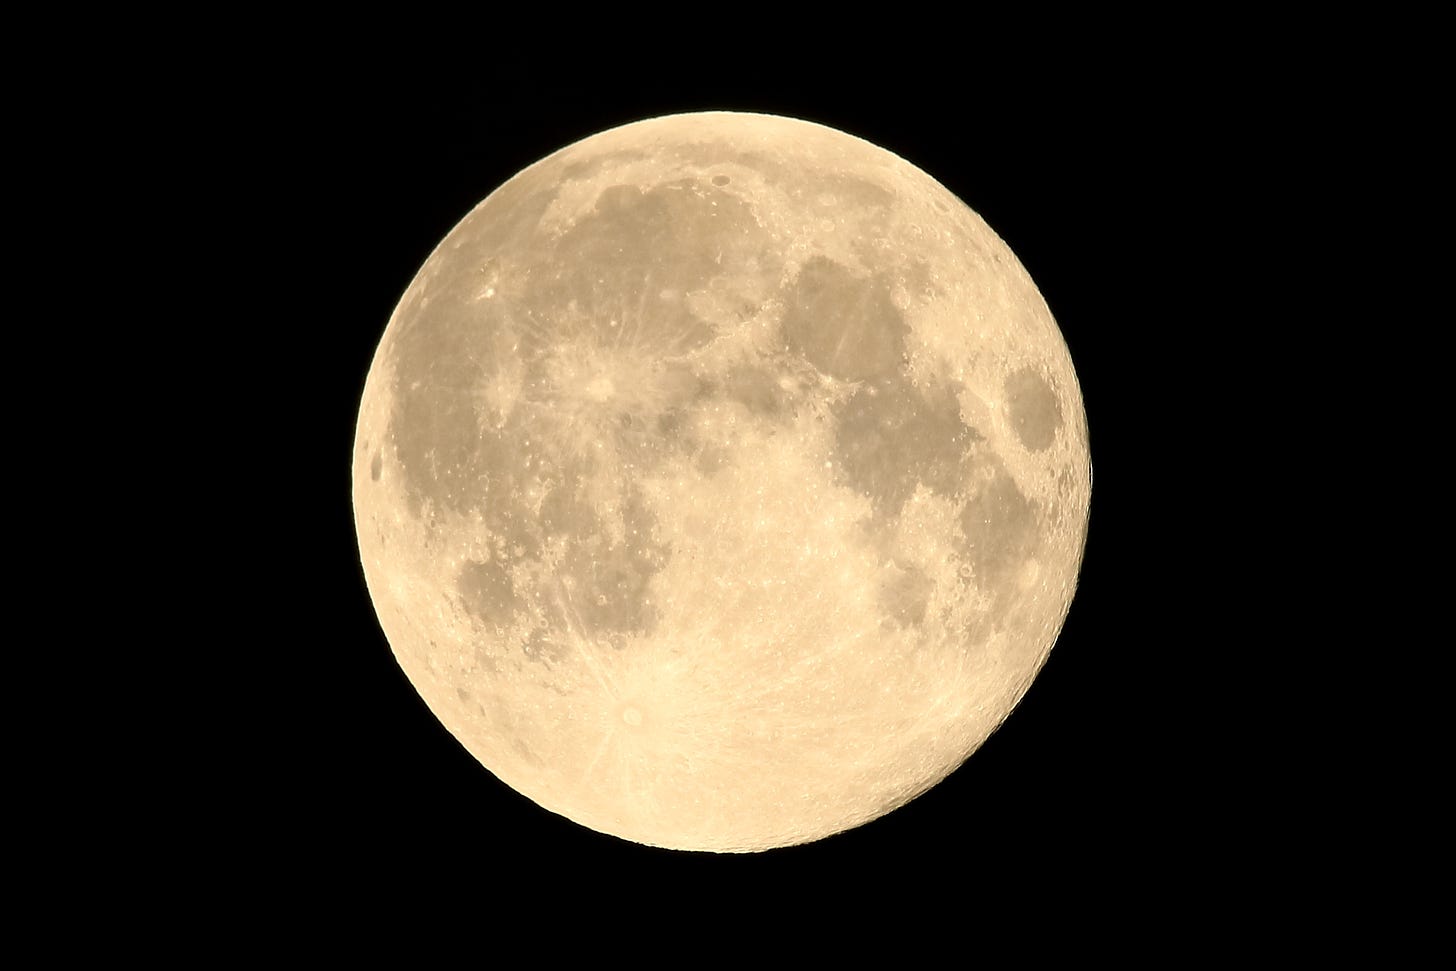 File:Strawberry moon 2018 06 29 Japan.jpg - Wikimedia Commons